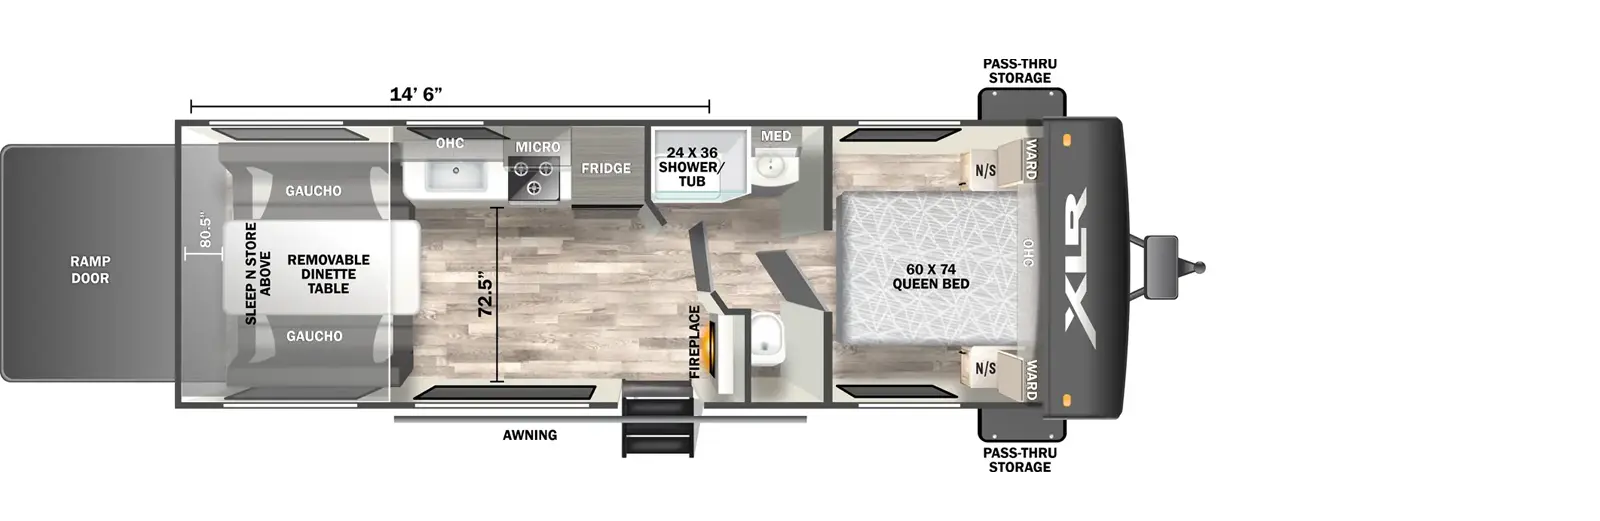 24LE - DSO Floorplan Image